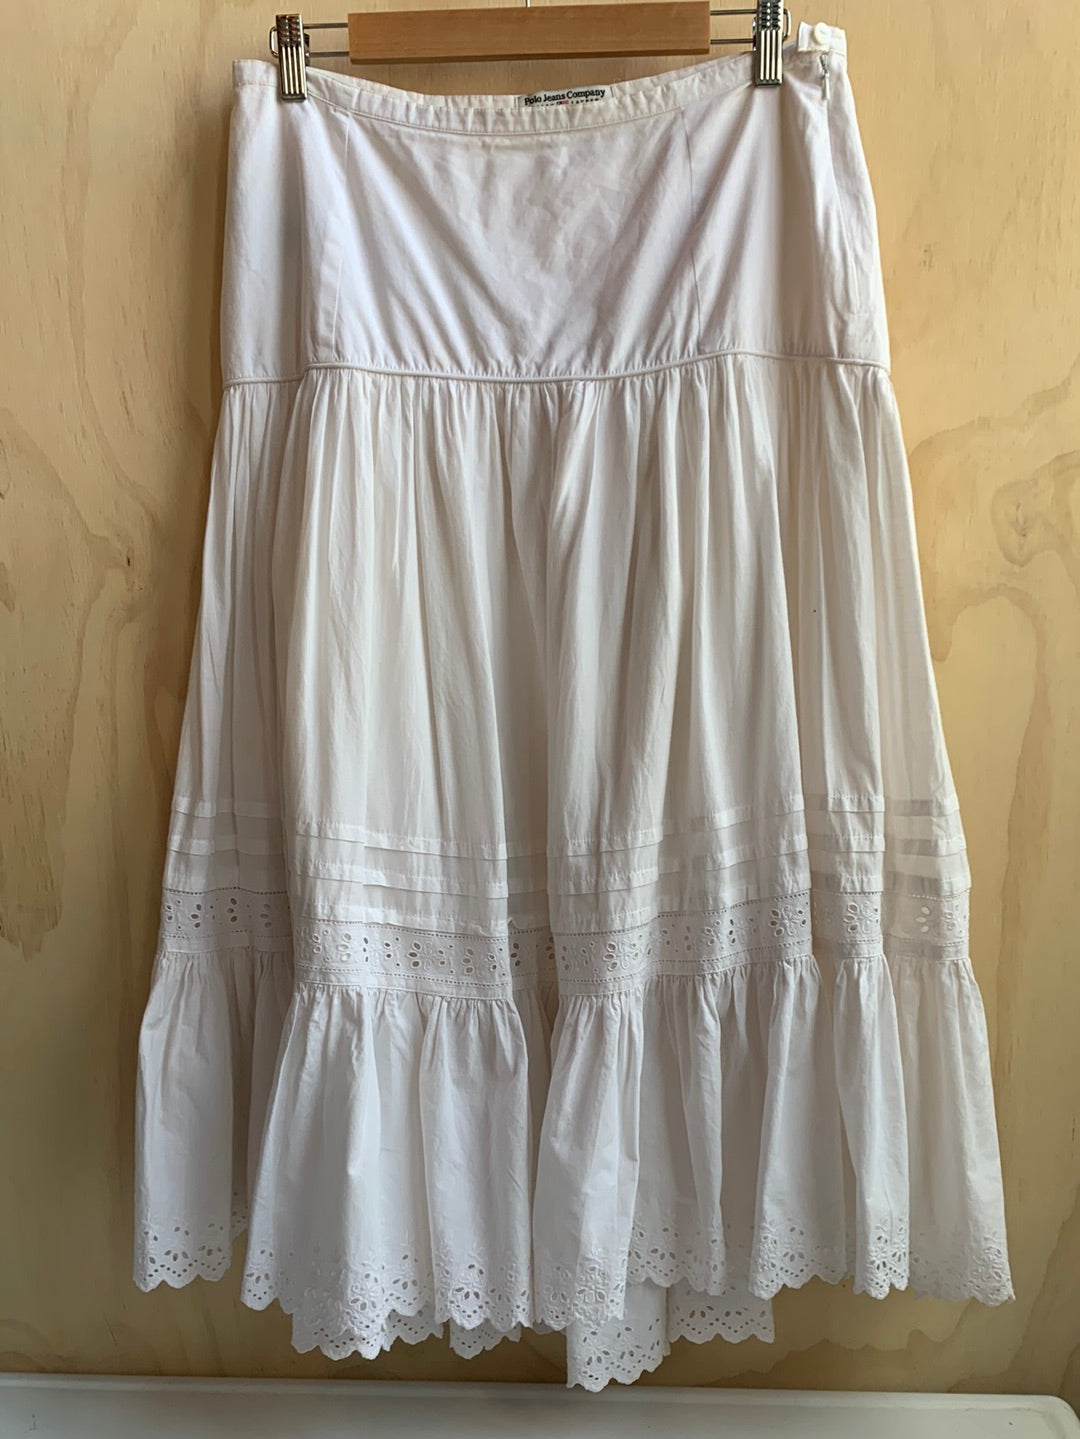 R.L. white skirt with eyelet detail